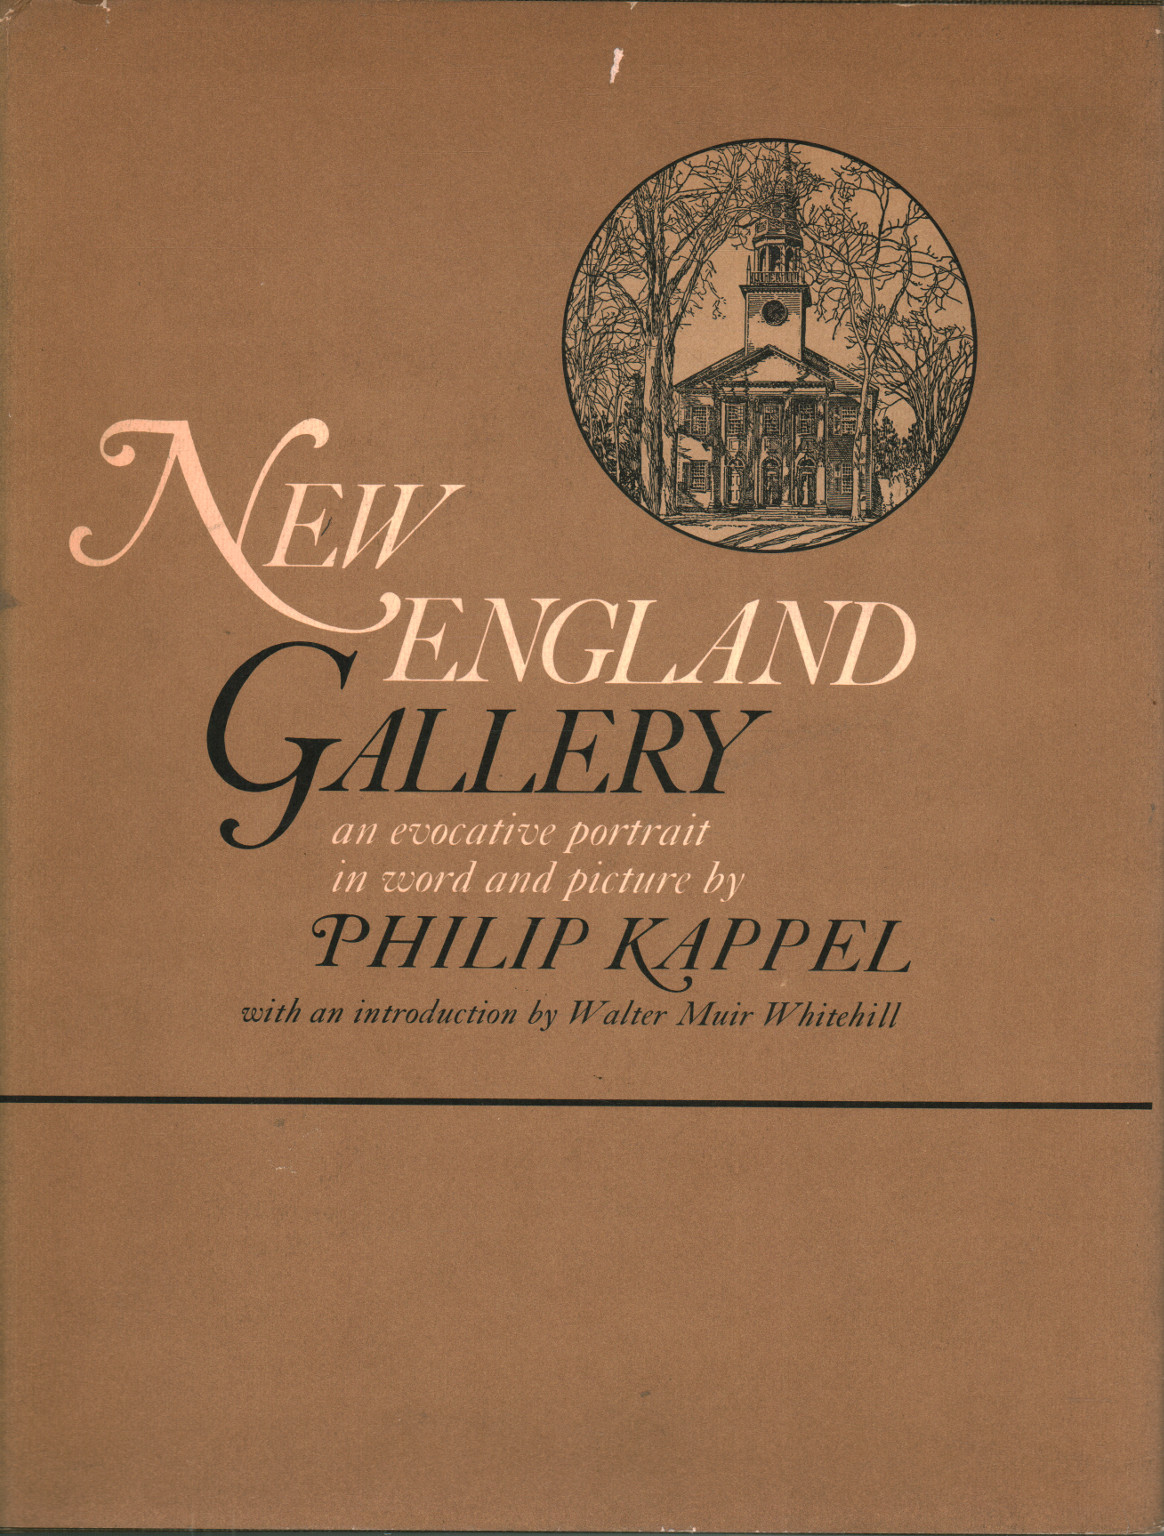 New England Gallery, Philip Kappel